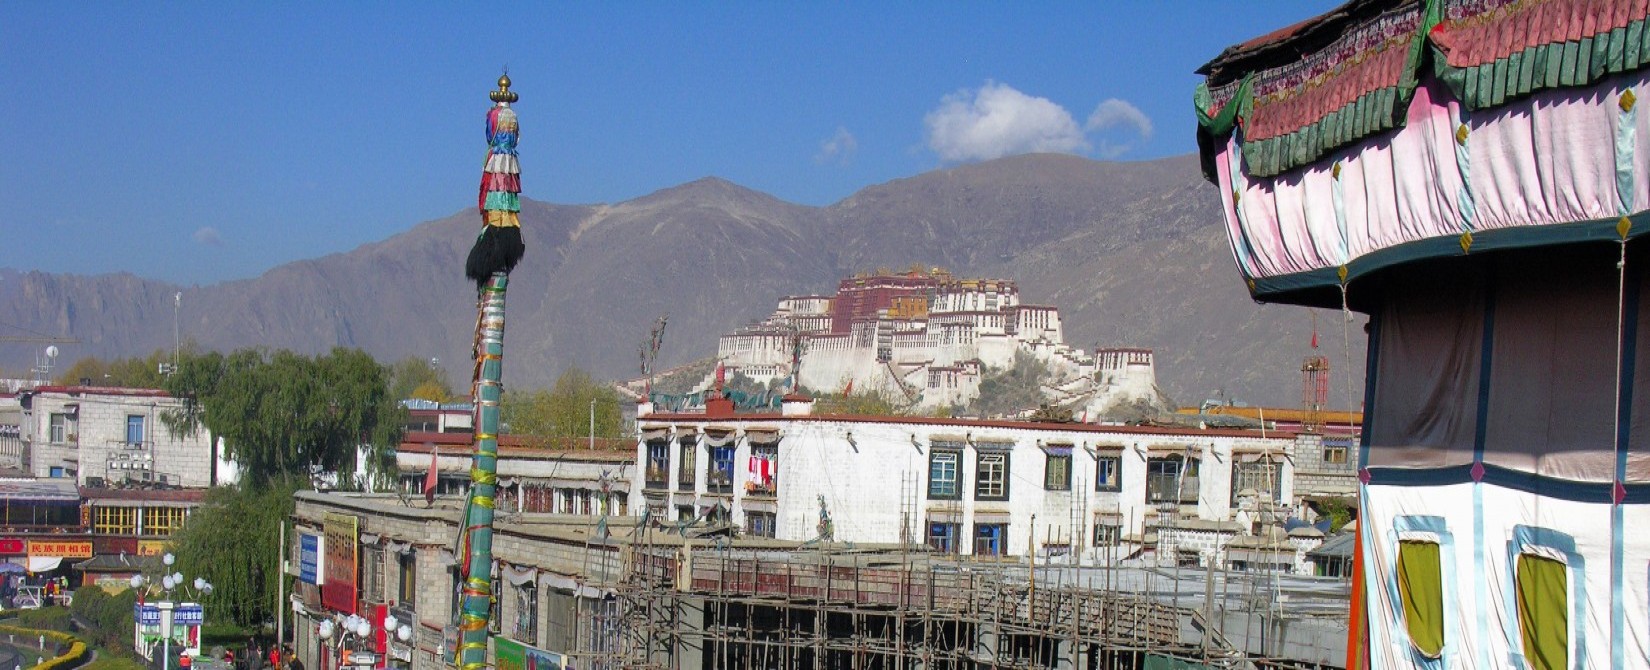 Barkhor Lhasa, Tibet 